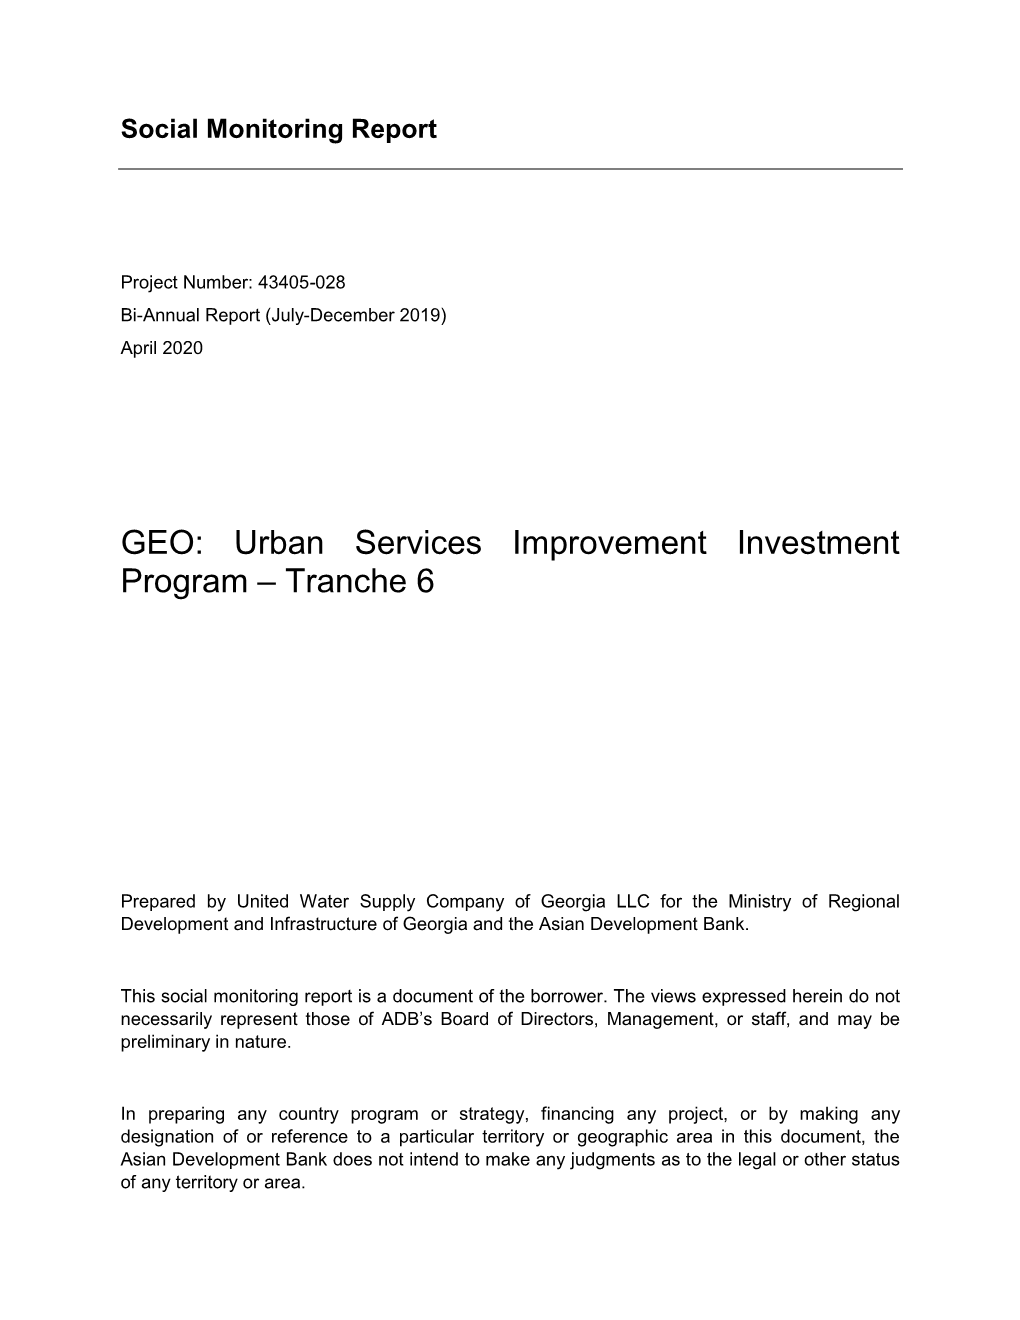 GEO: Urban Services Improvement Investment Program – Tranche 6